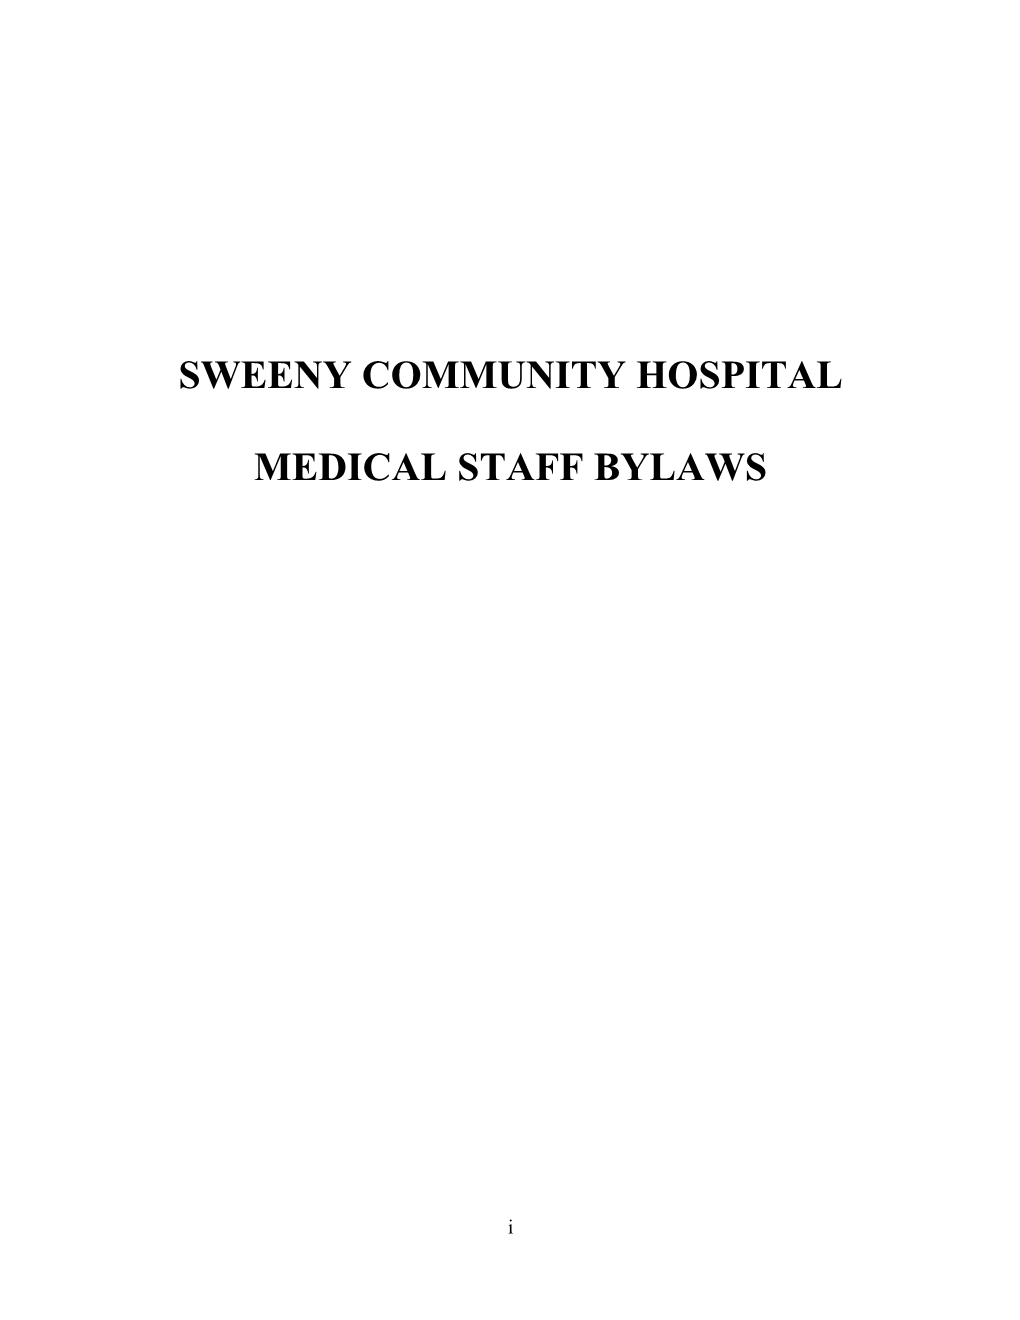 Sweeny Community Hospital Medical Staff Bylaws